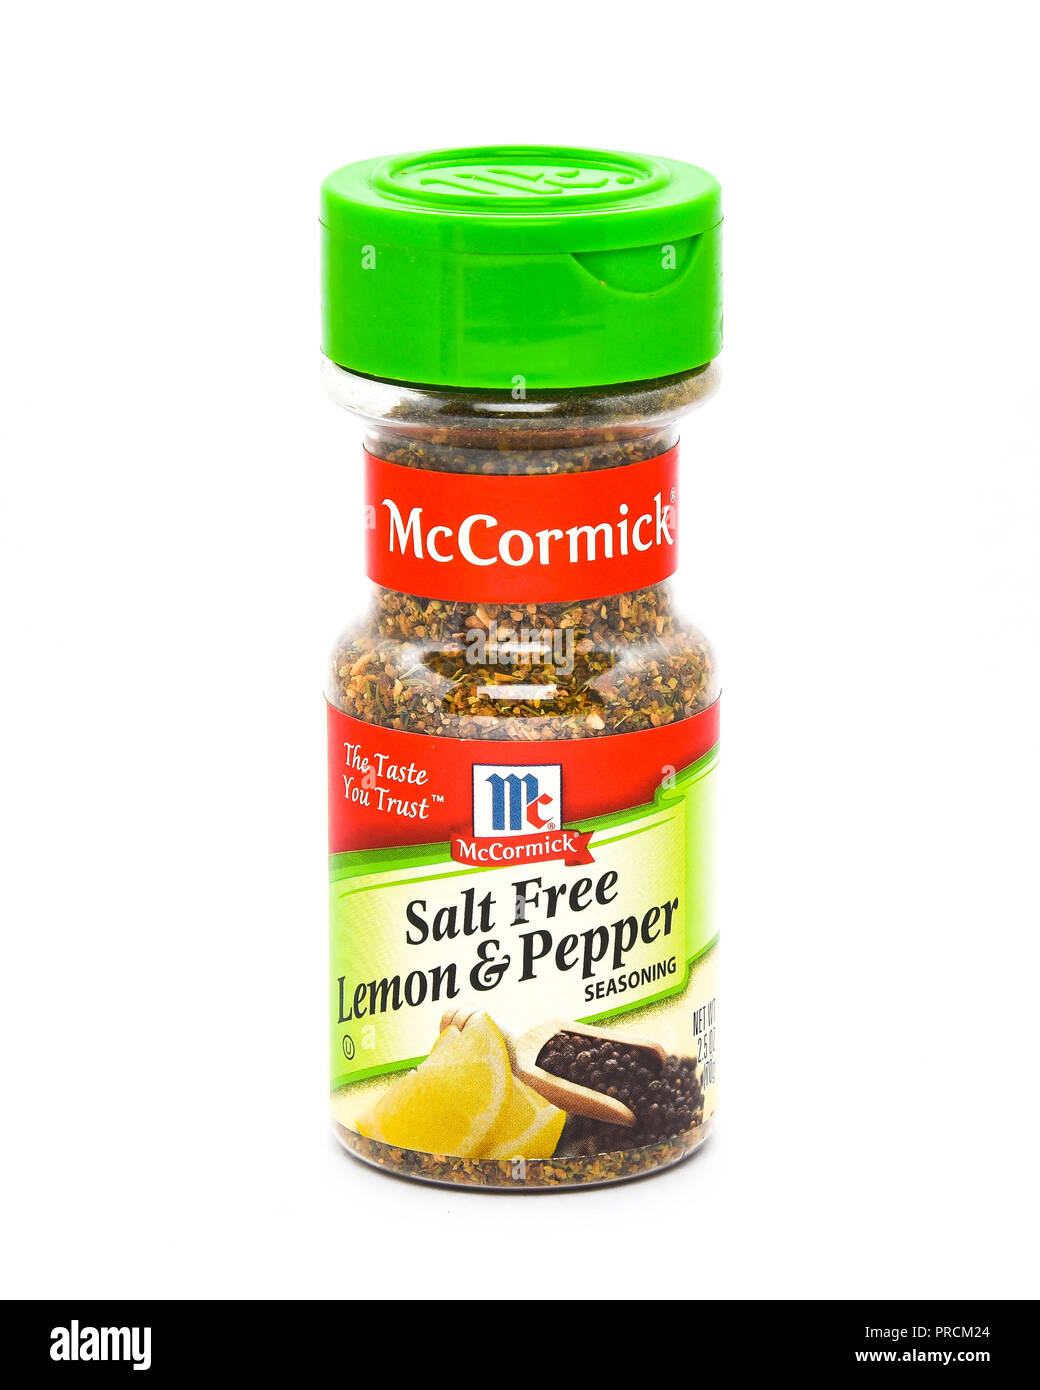 Eine Flasche McCormick's Kostenlose Zitrone Salz & Pfeffer würzen. Stockfoto